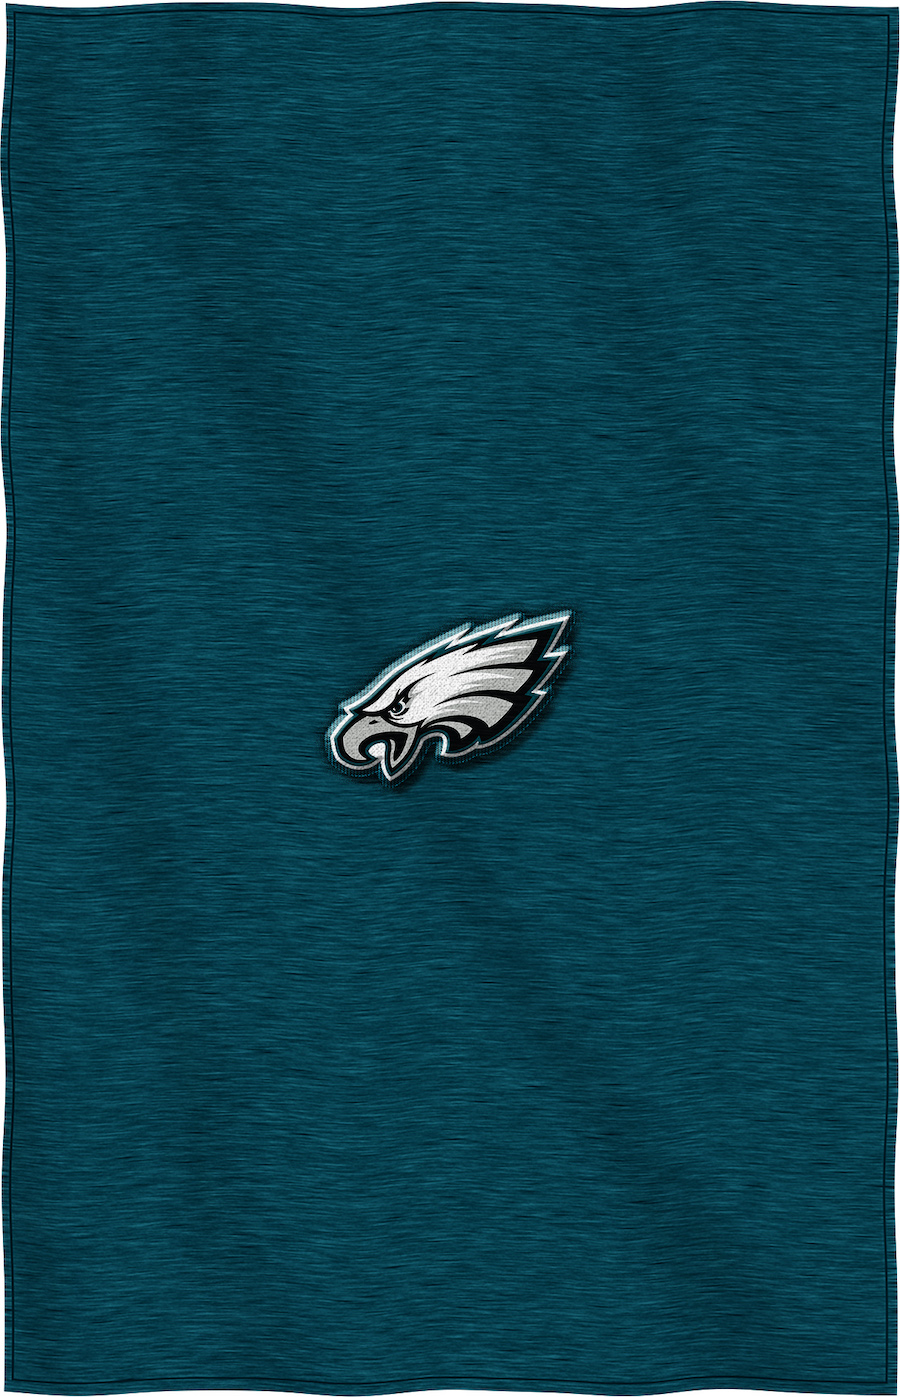 Philadelphia Eagles SWEATSHIRT style Throw Blanket